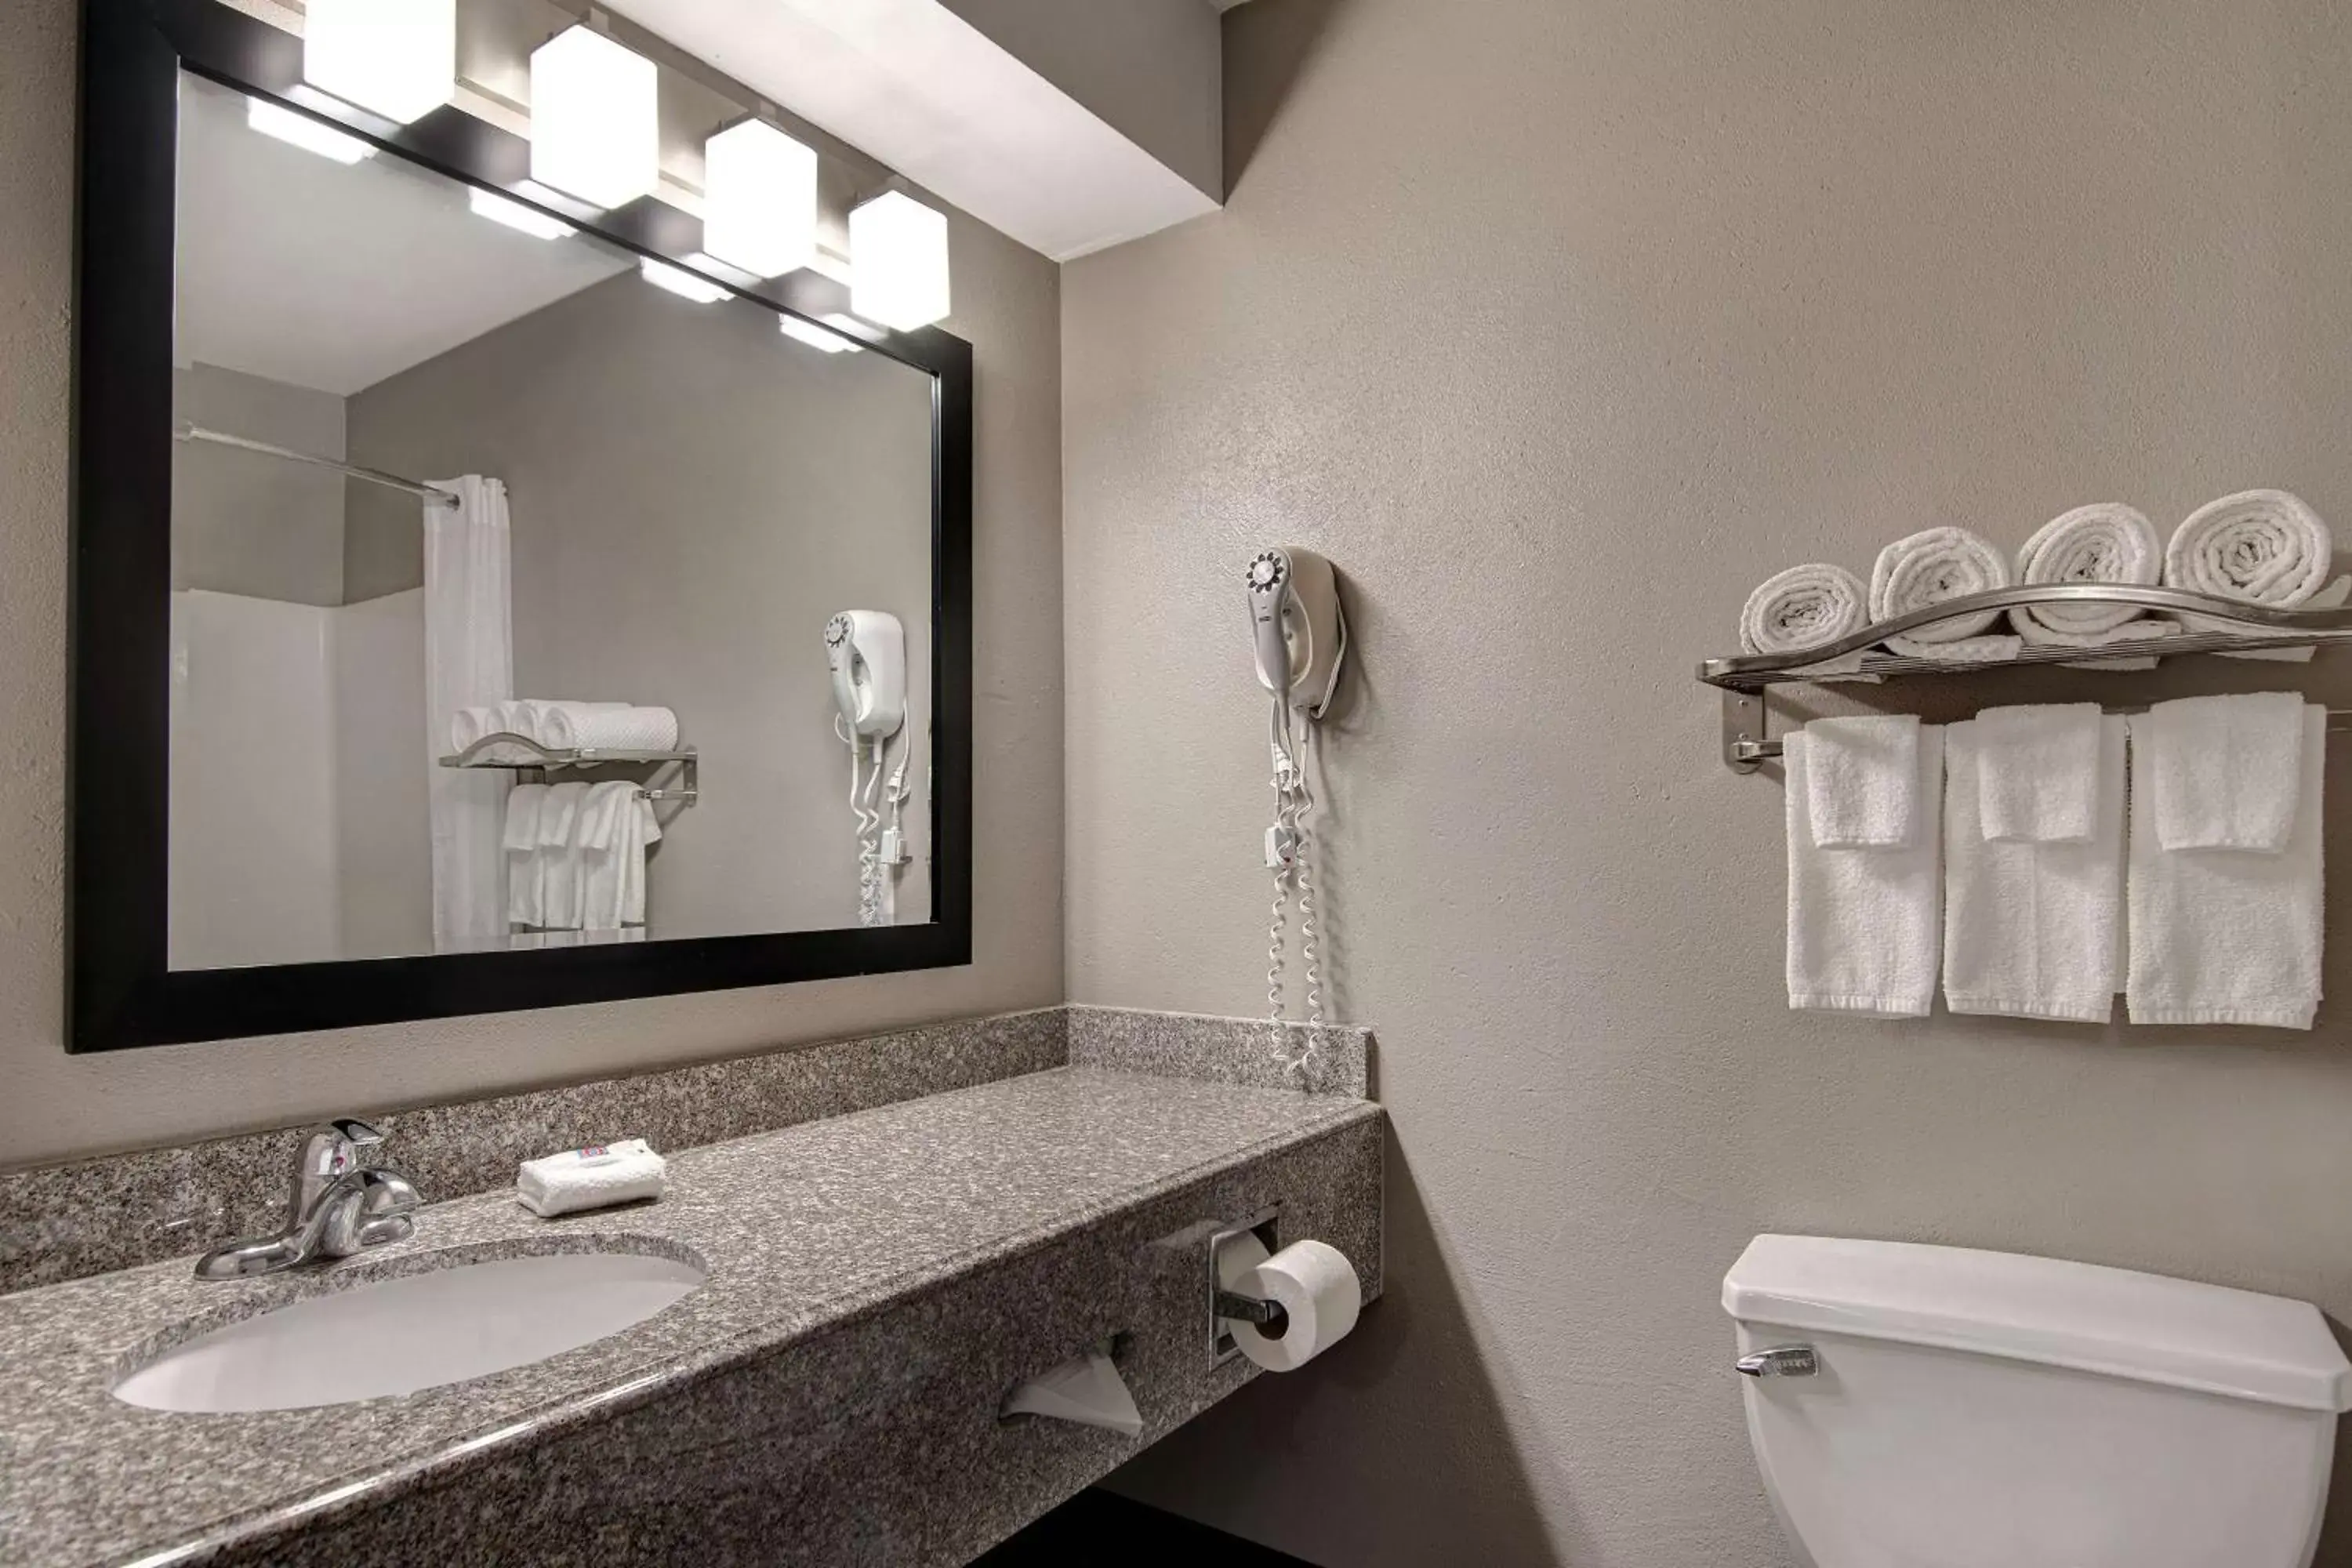 Photo of the whole room, Bathroom in Studio 6 Pensacola, FL - West I-10